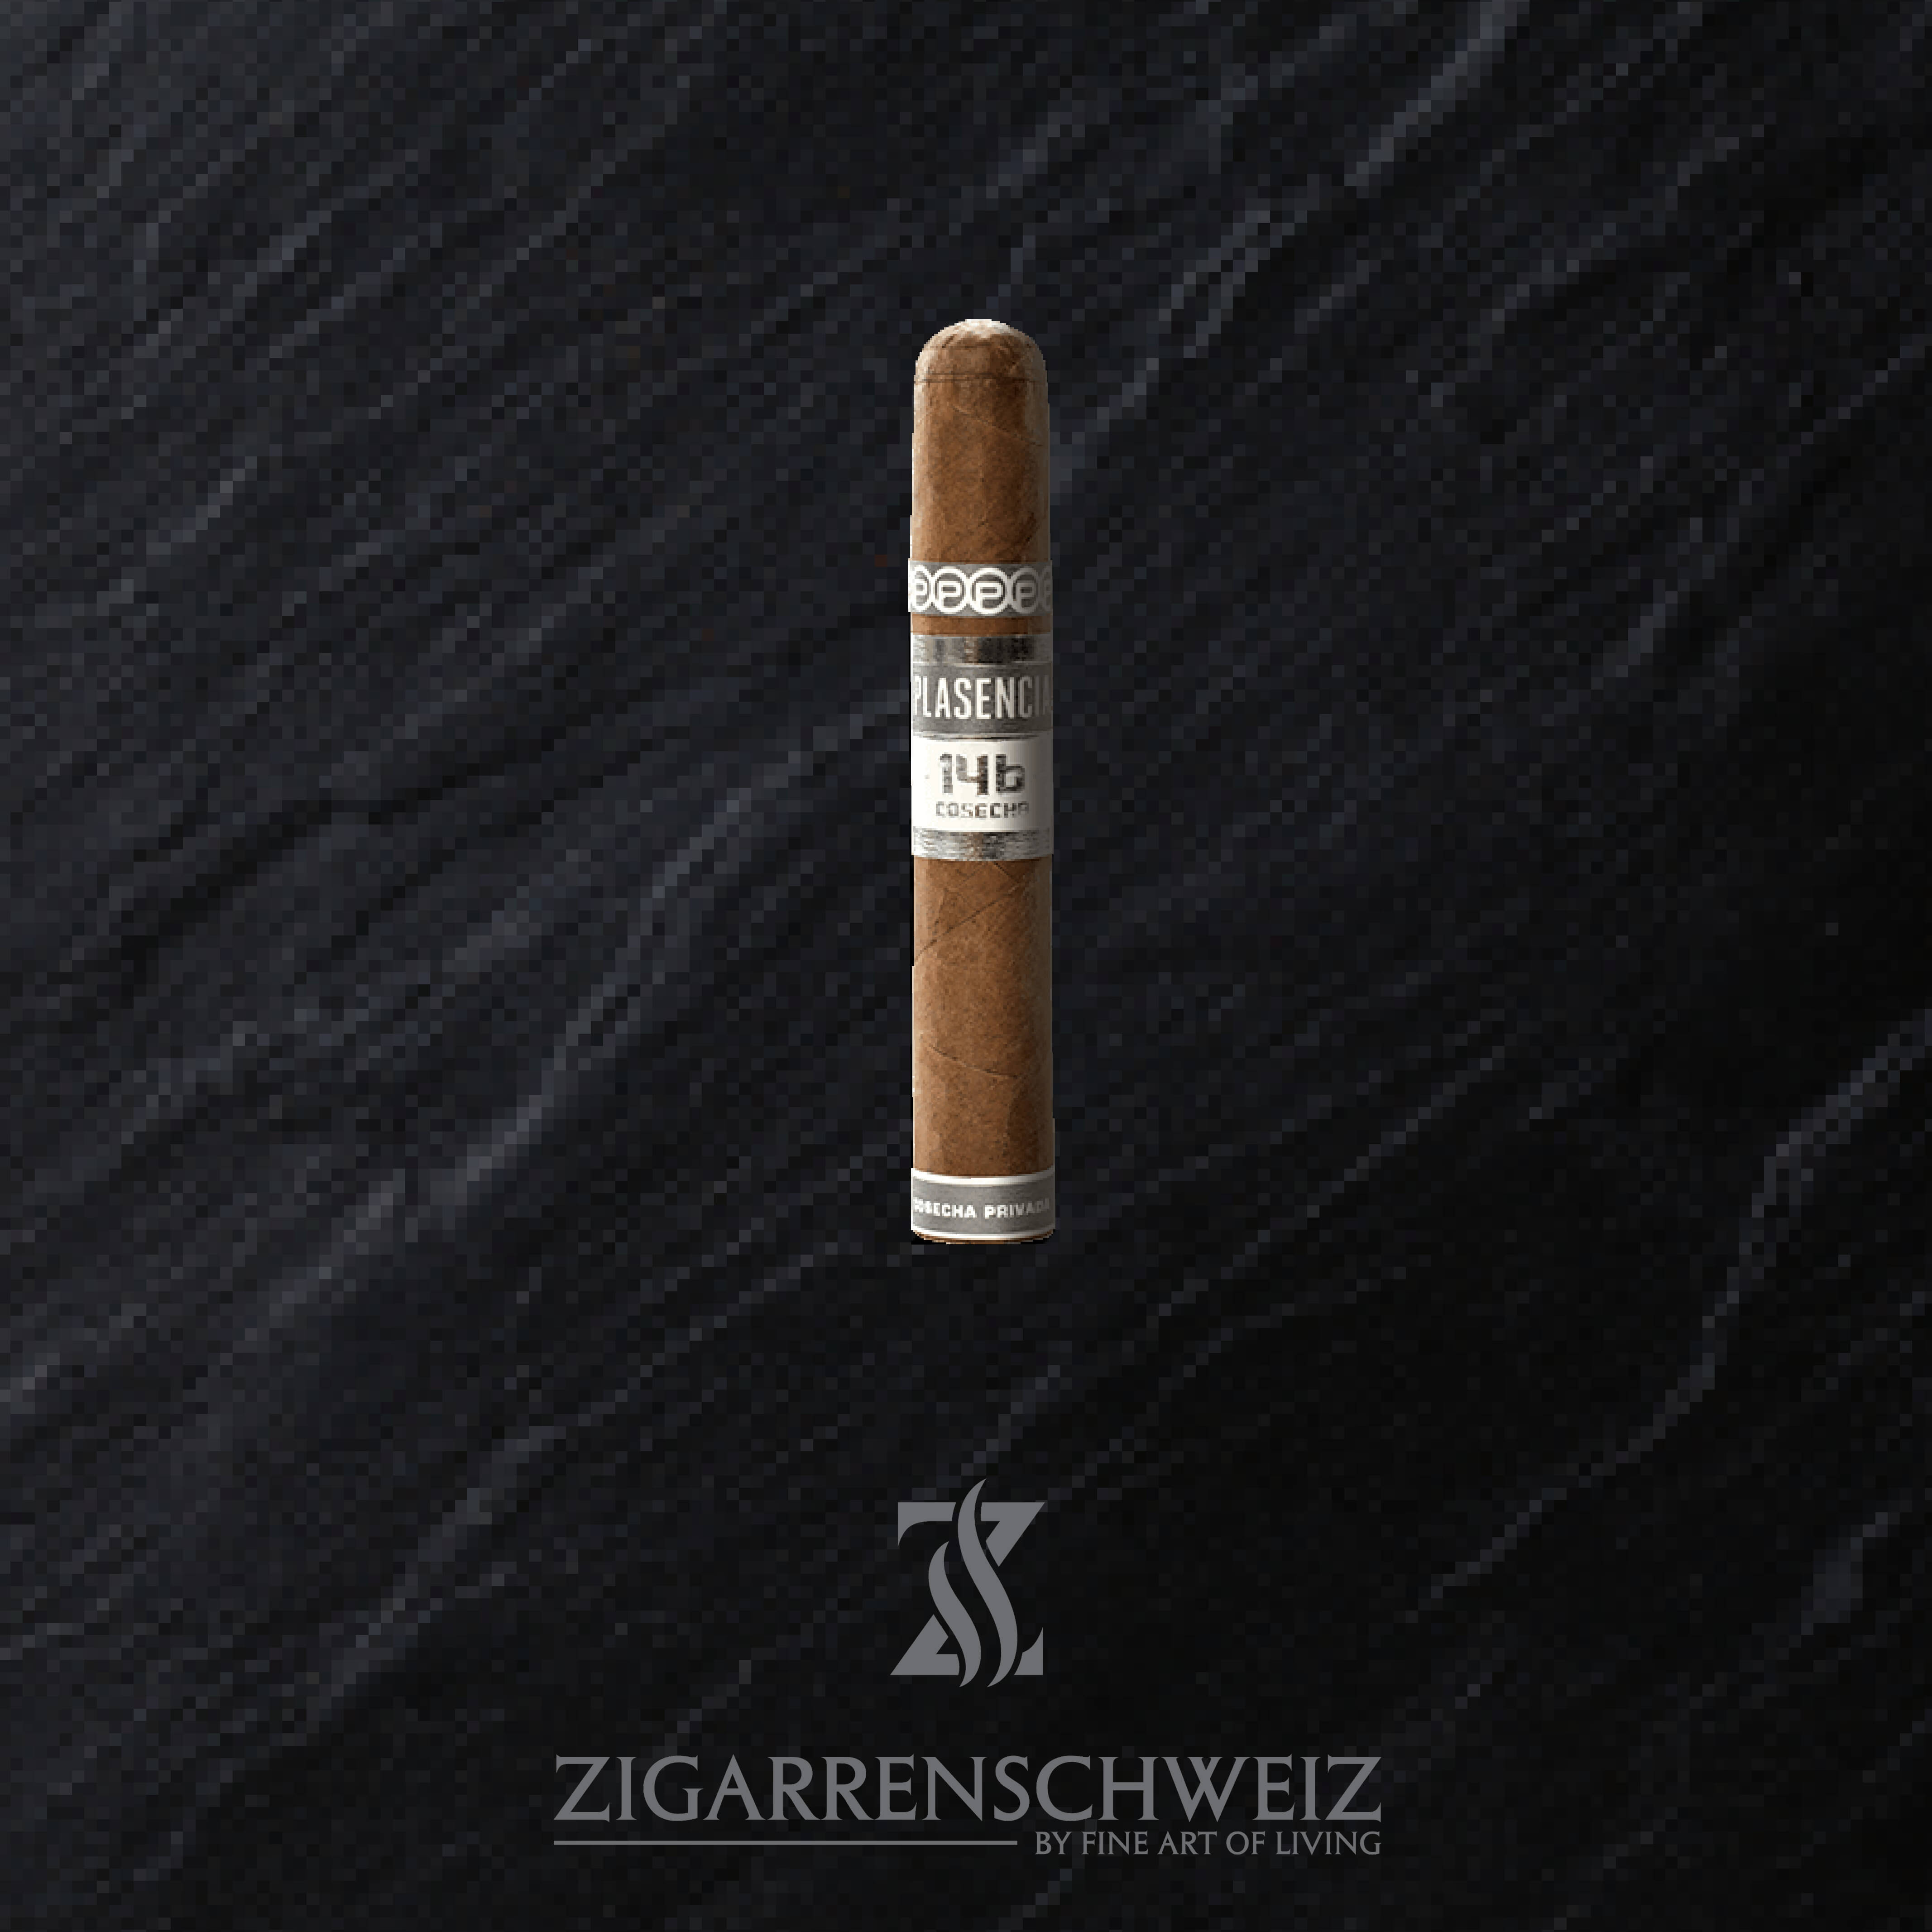 Plasencia Cosecha 146 La Vega Zigarren im Robusto Gordo Format